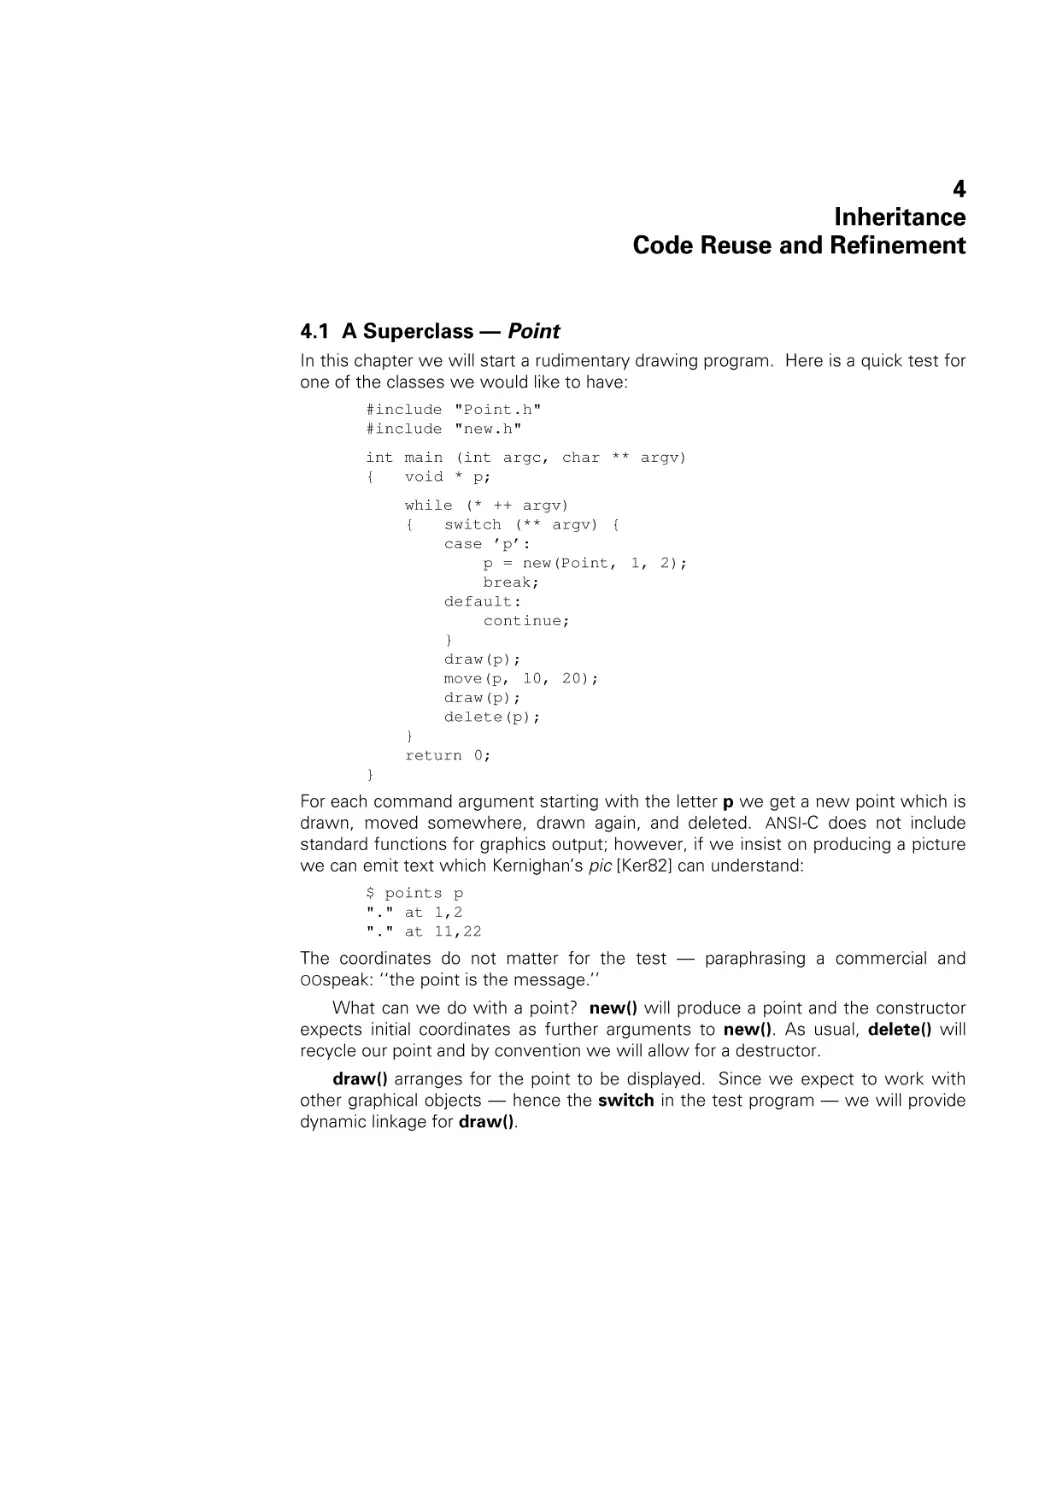 Inheritance Code Reuse & Refinement
Superclass - Point